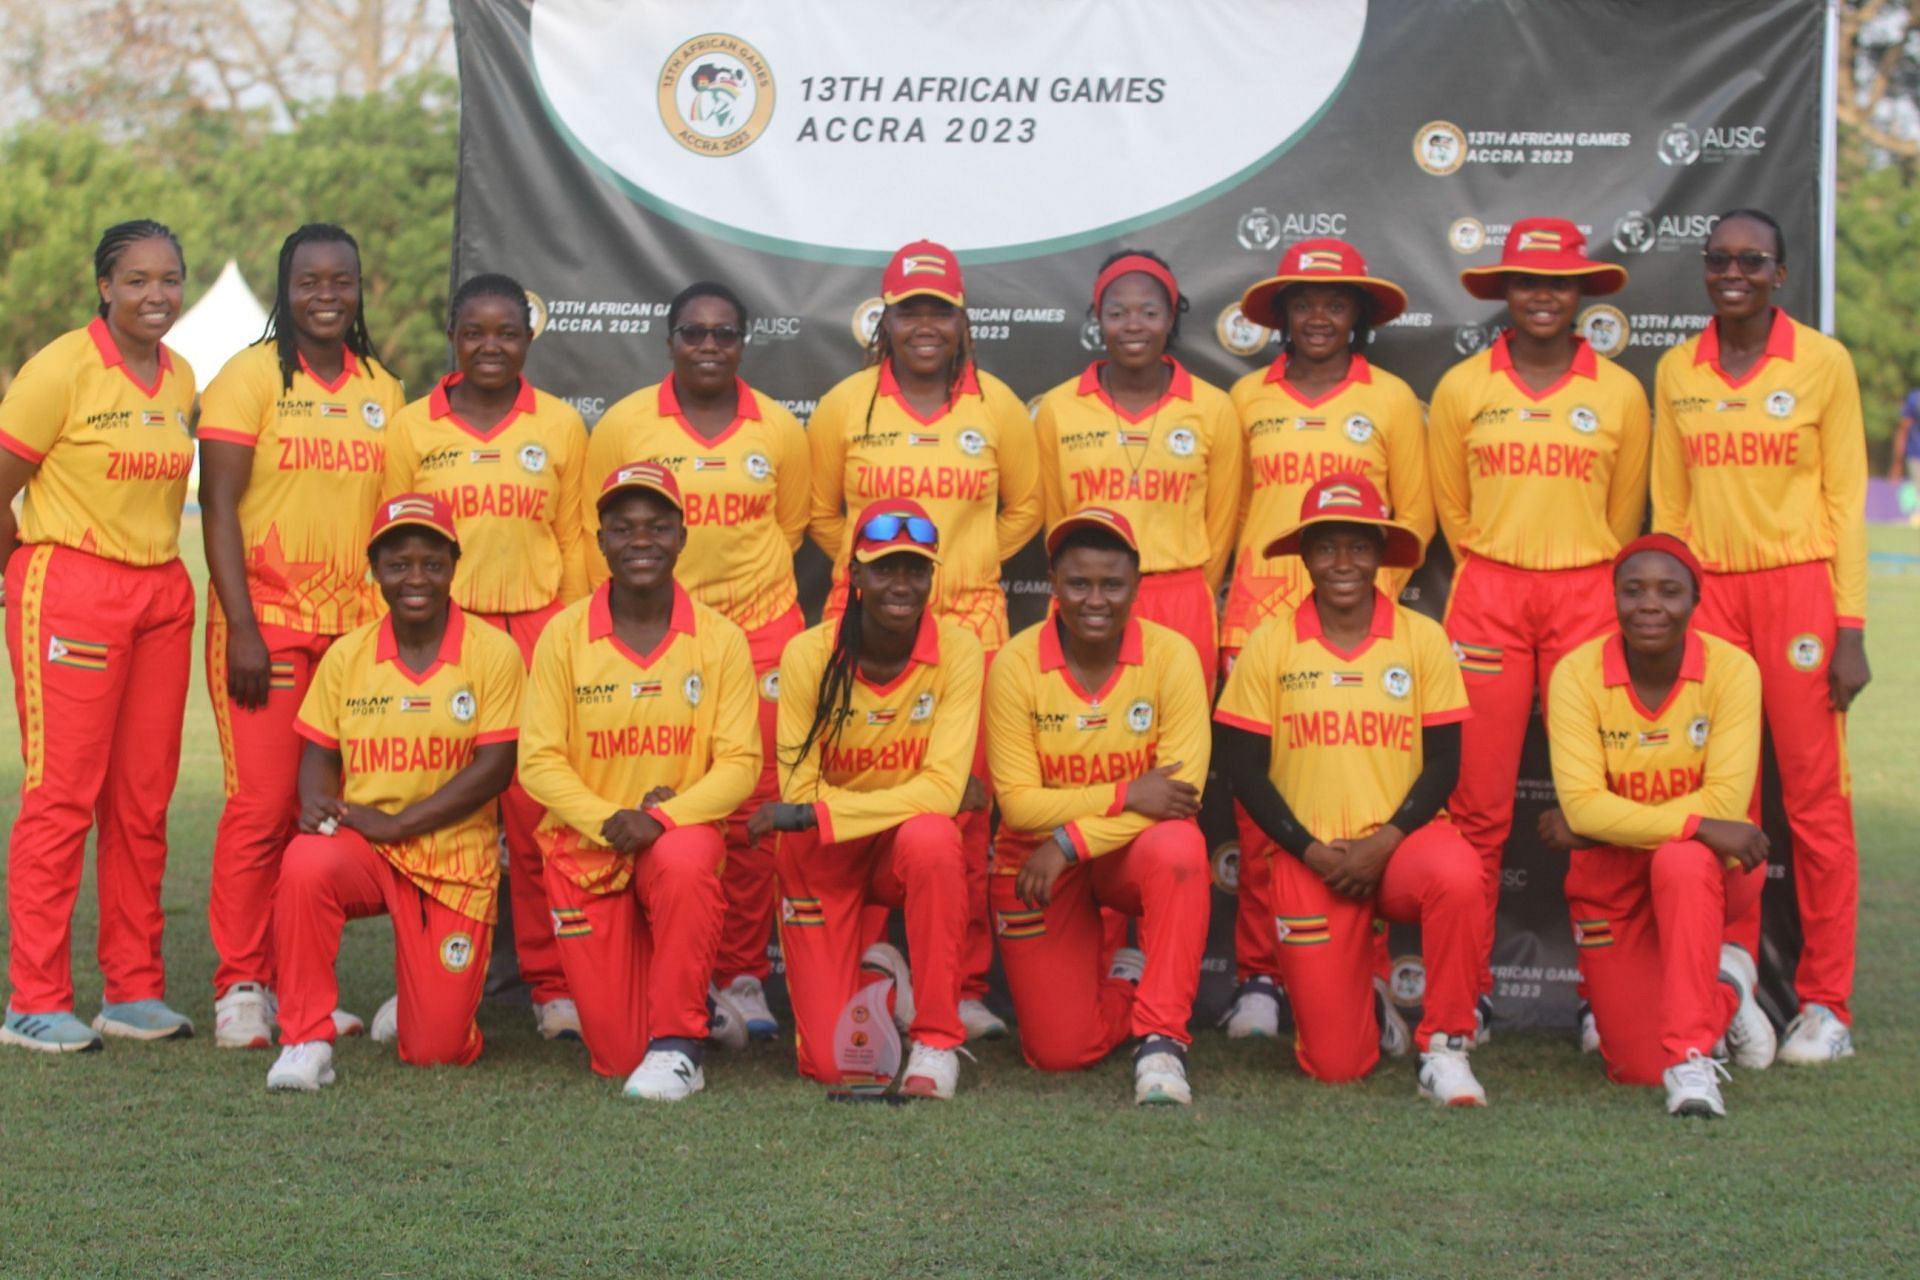                     Zimbabwe Cricket Team